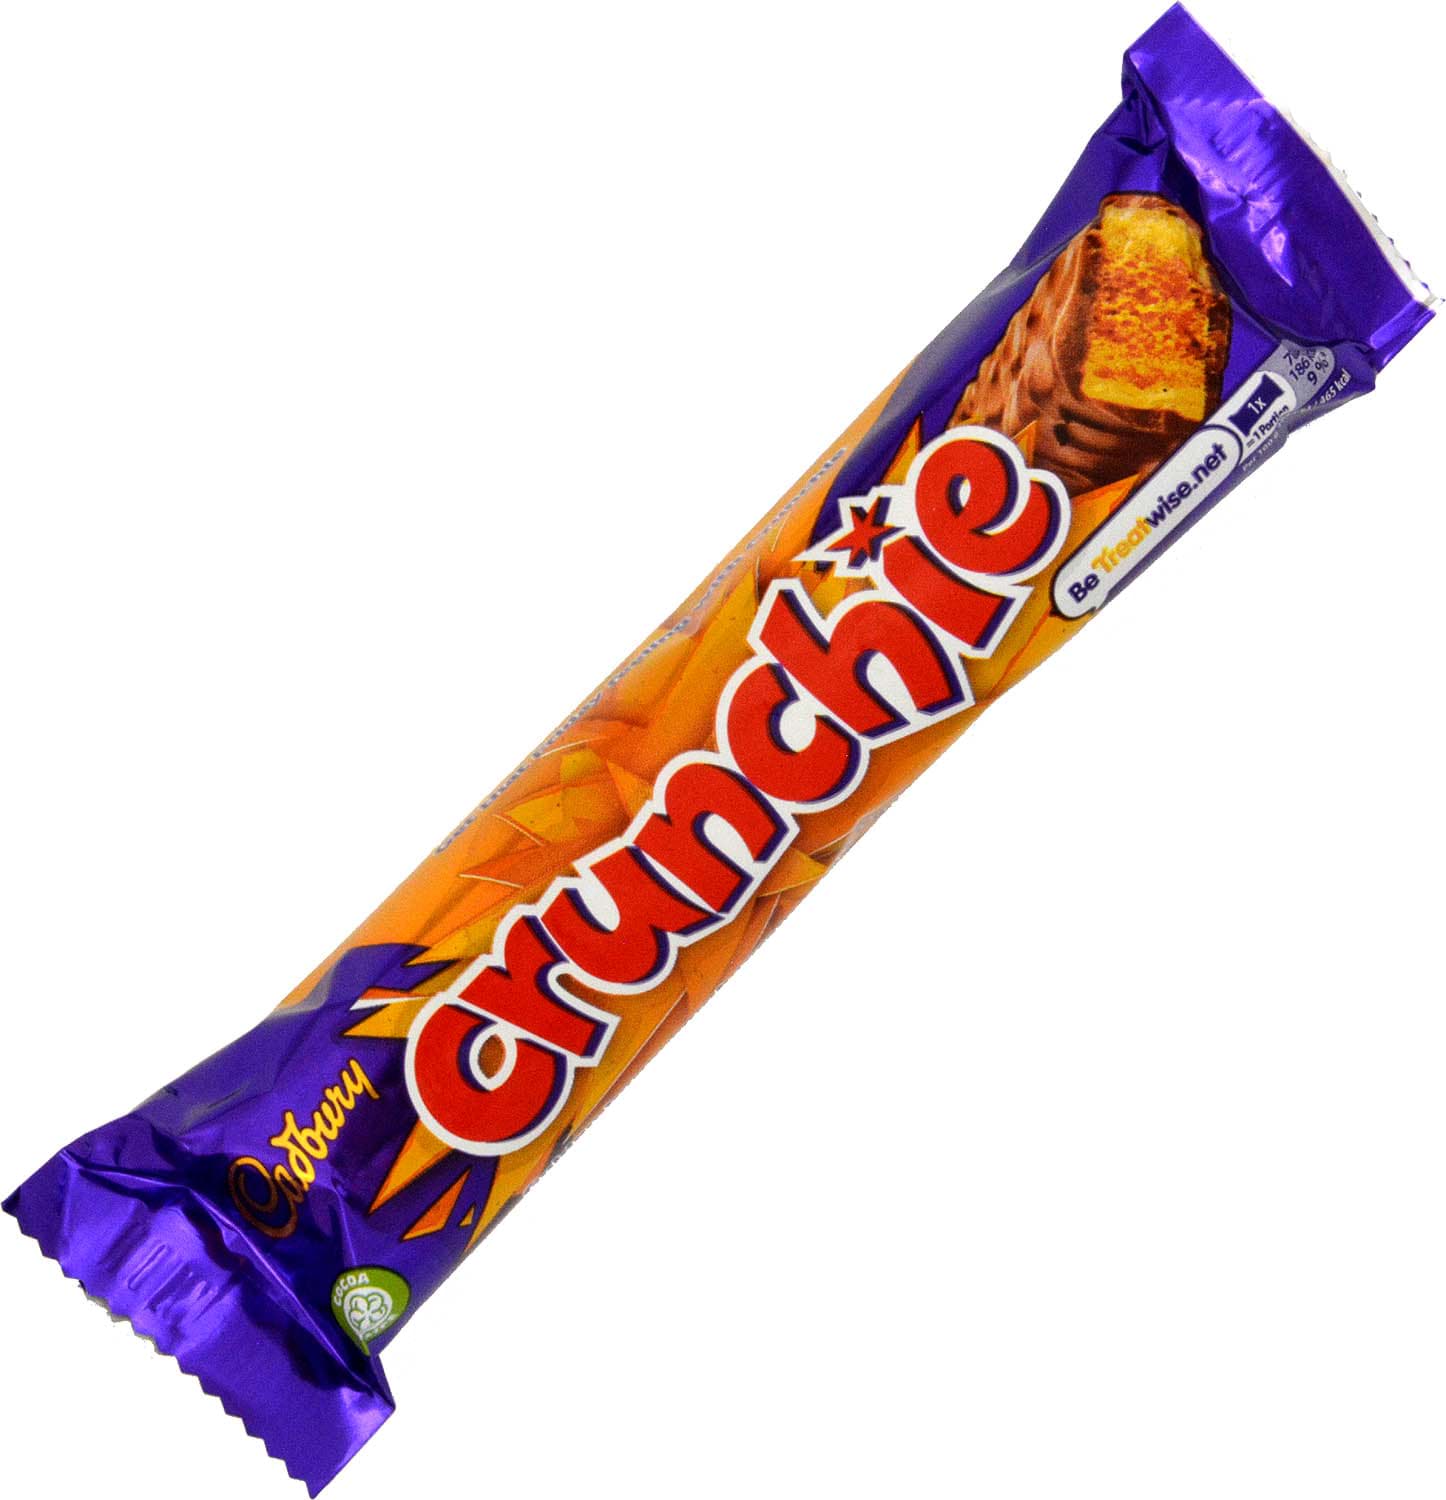 Picture of Cadbury Crunchie Chocolate Bar